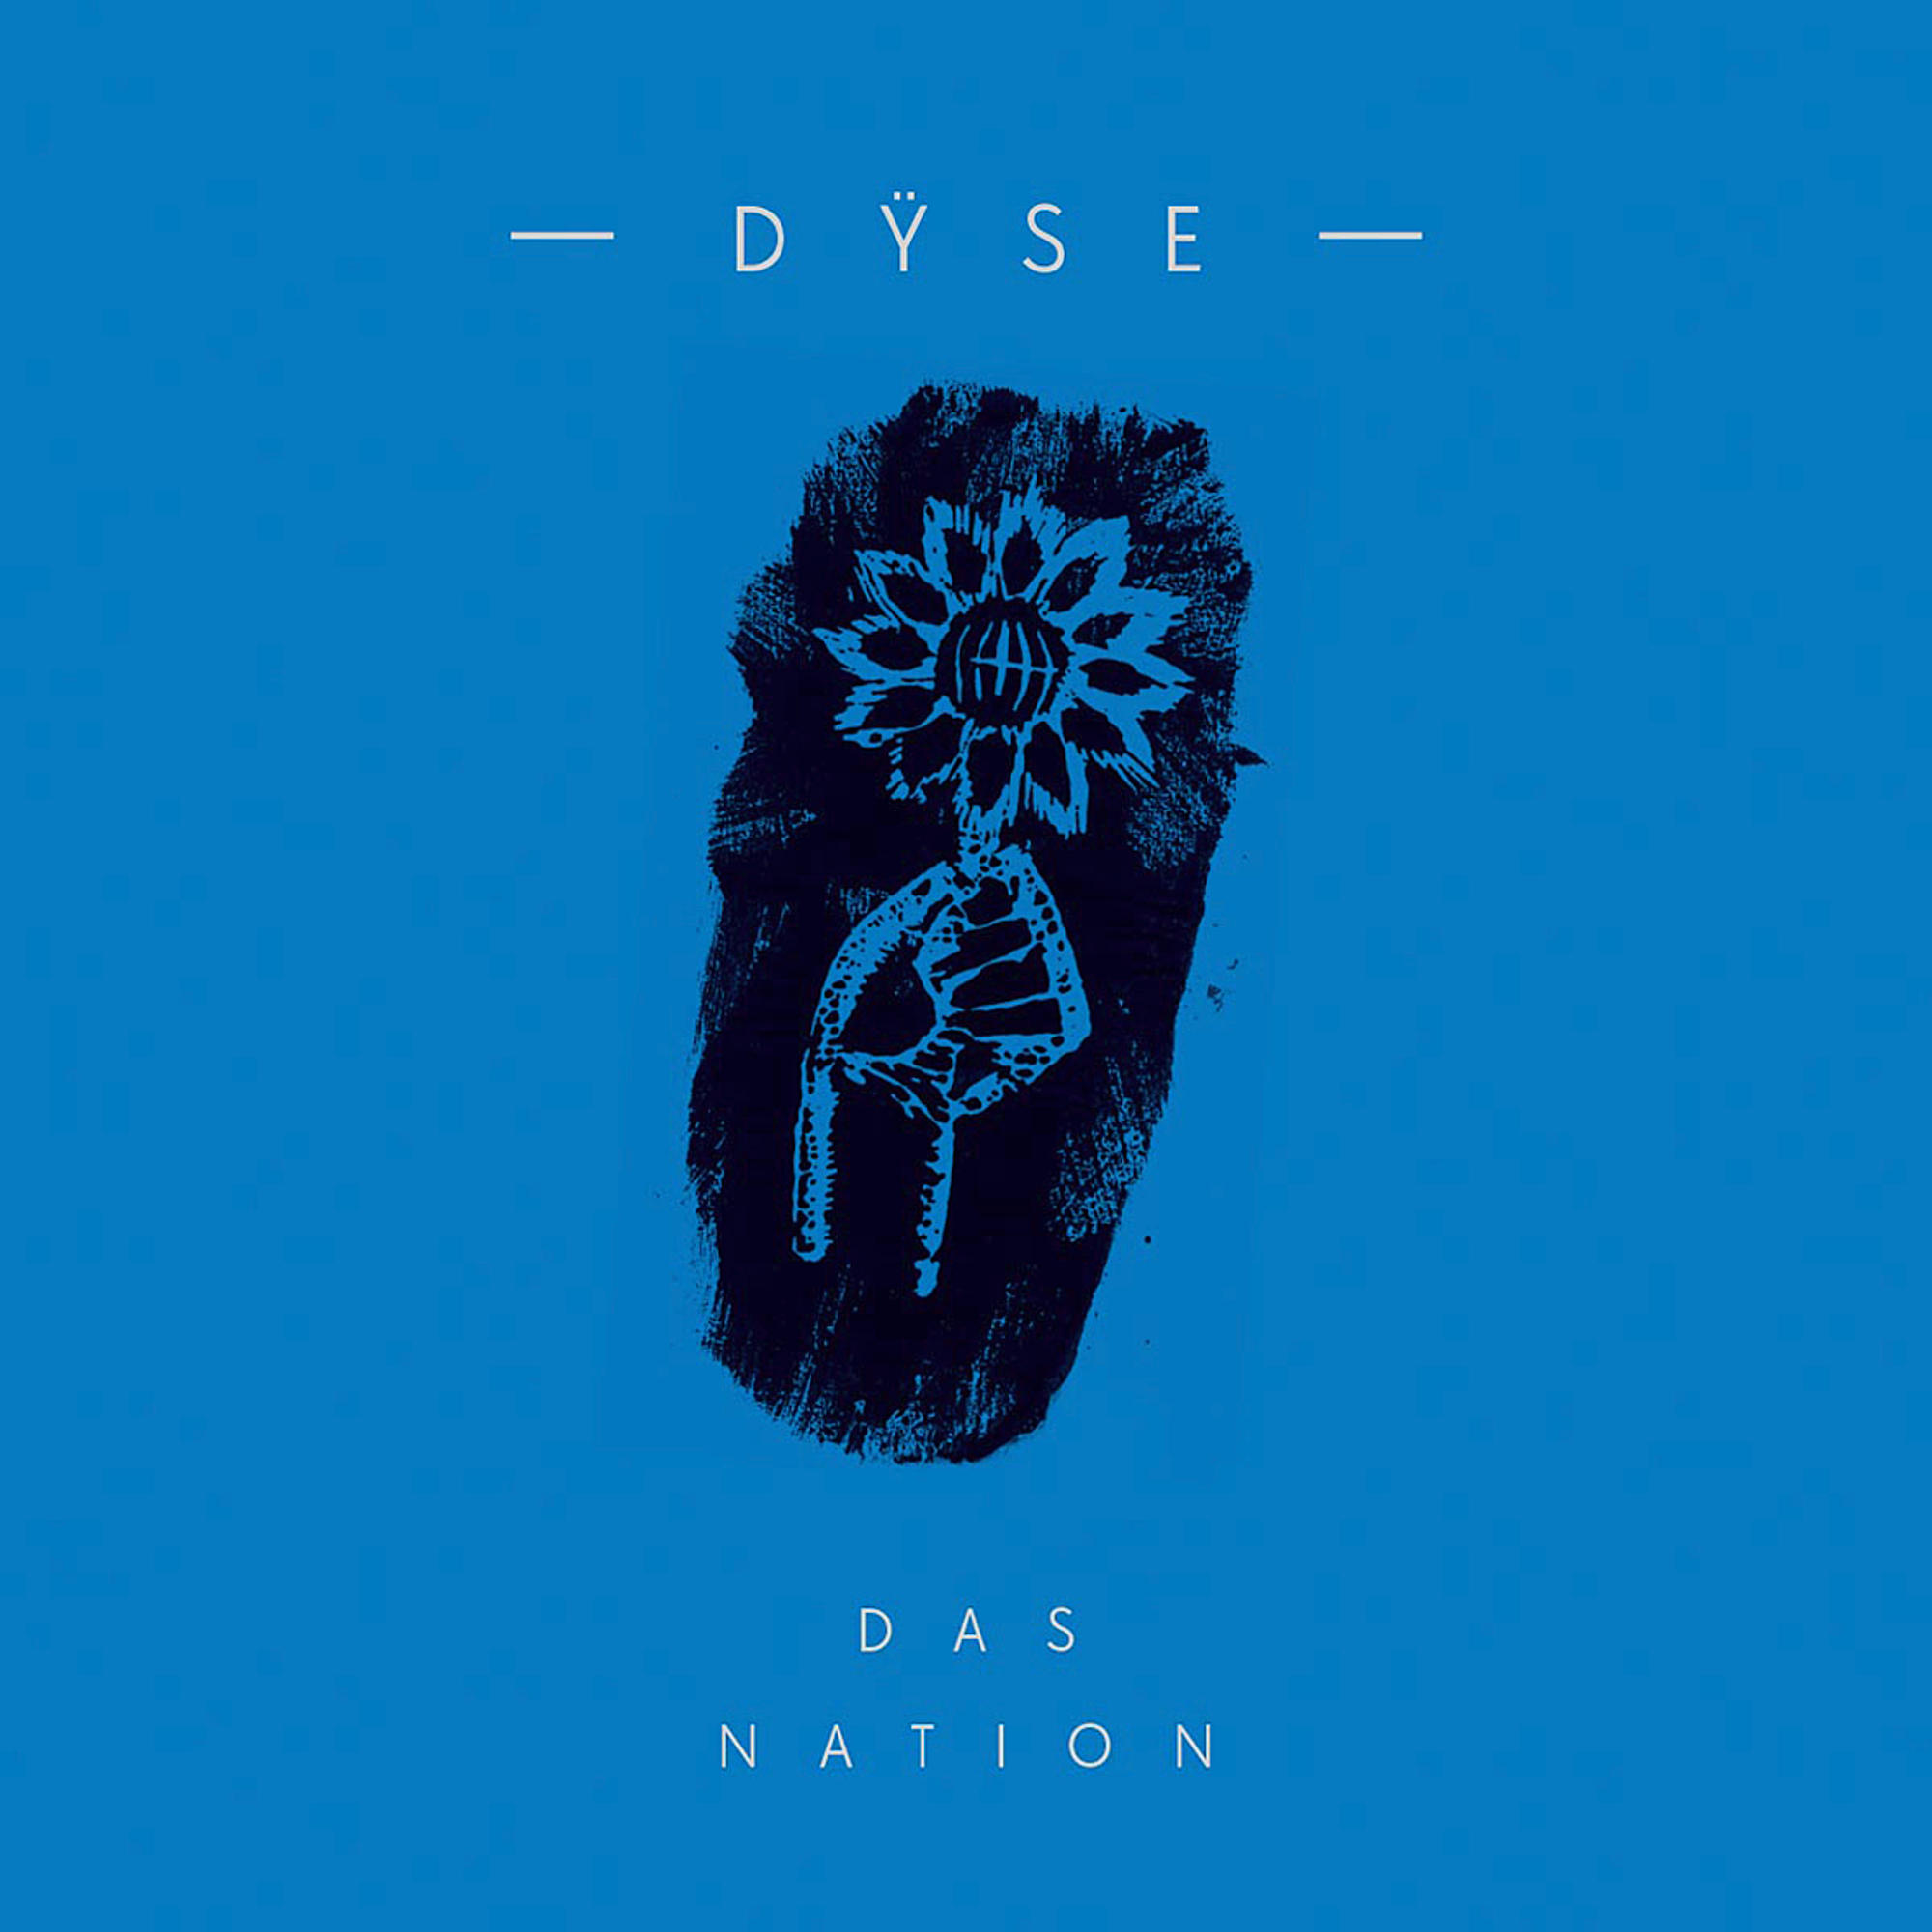 Das (Vinyl) - Dyse - Nation